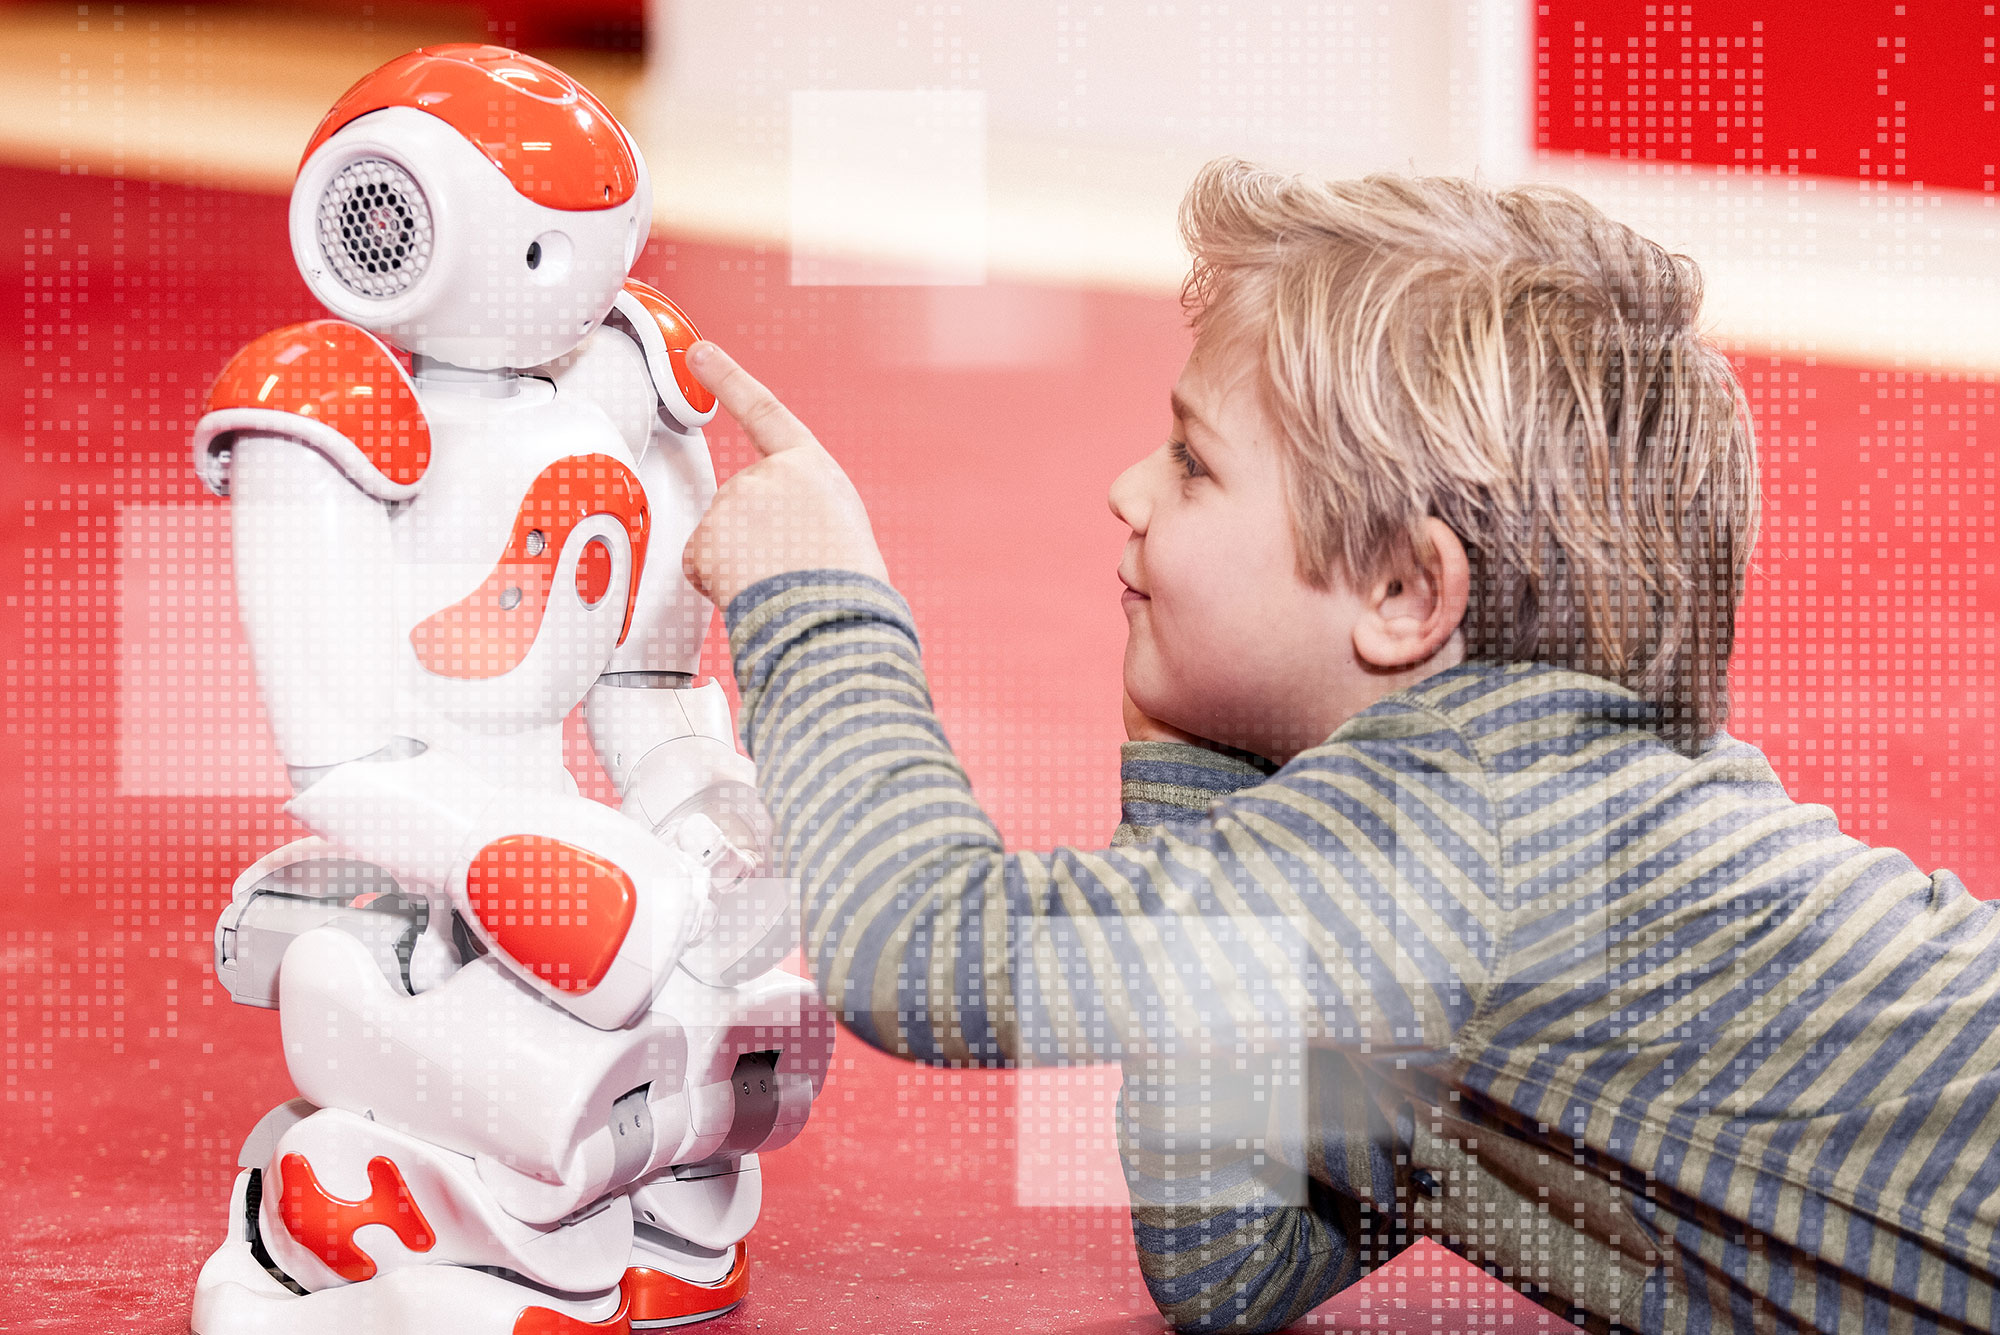 Forschungsfeld »Mensch-Technik-Interaktion«, Kind spielt mit Roboter